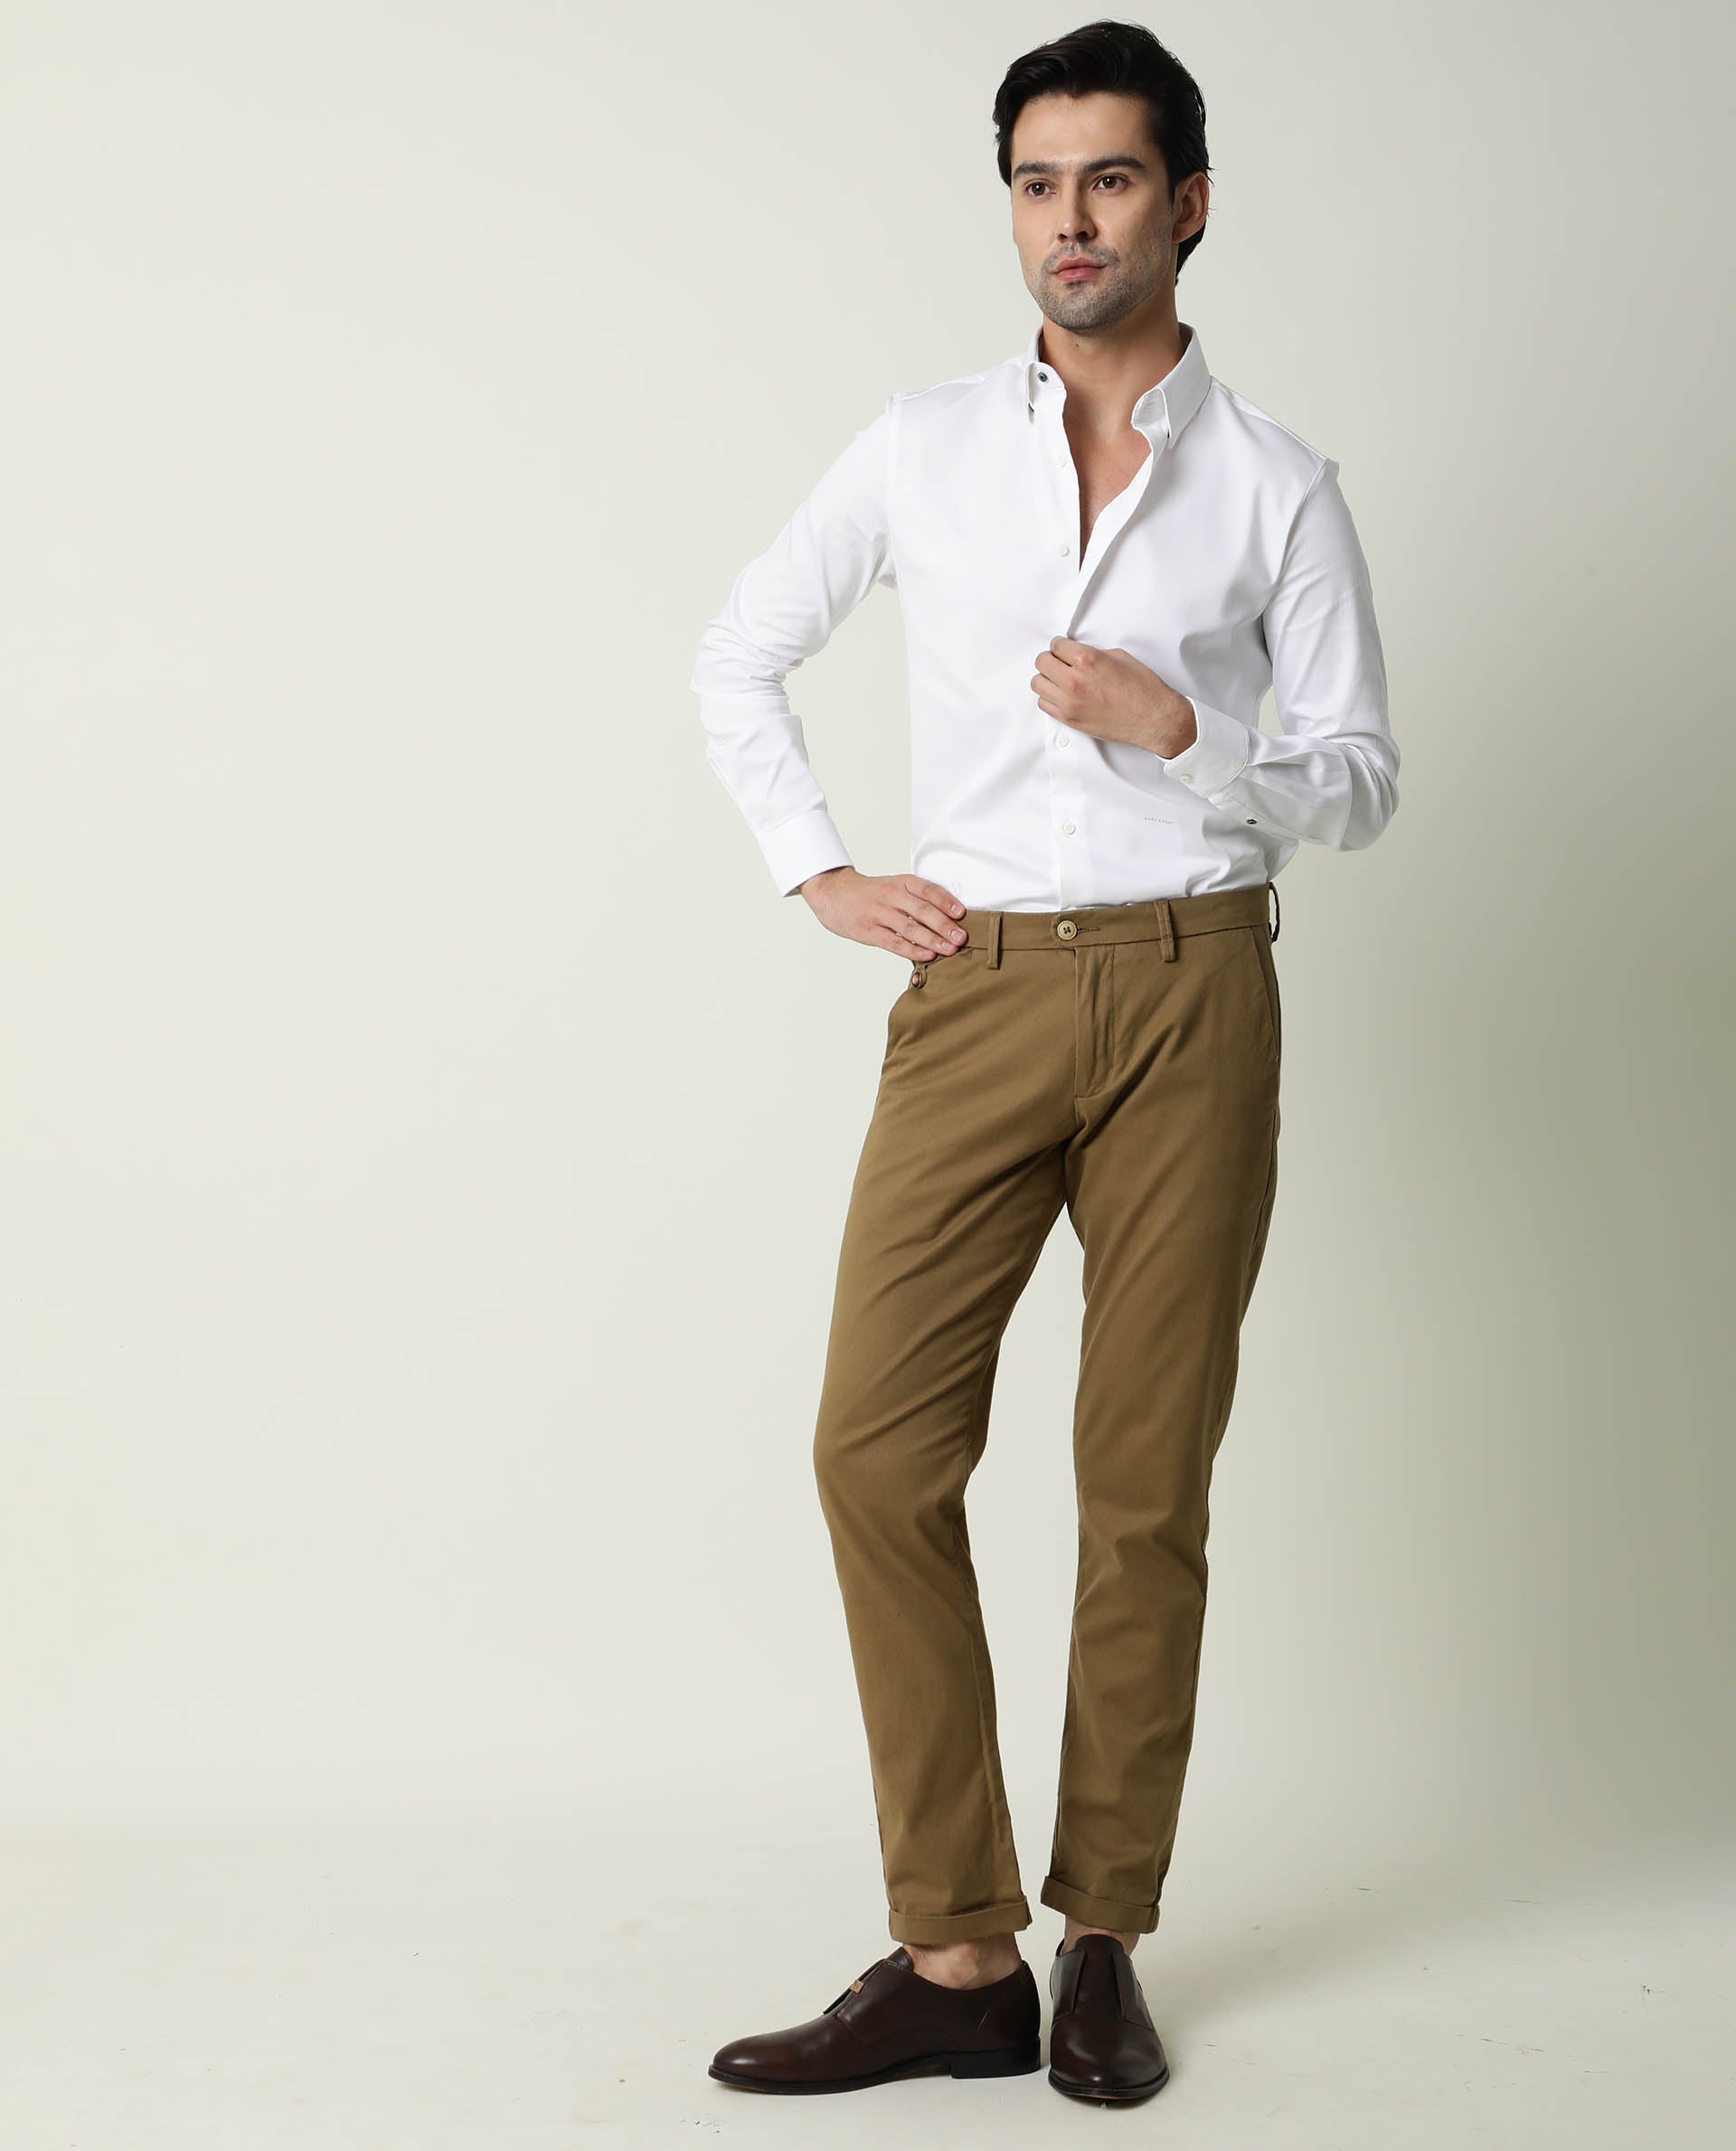 white shirt and brown pants